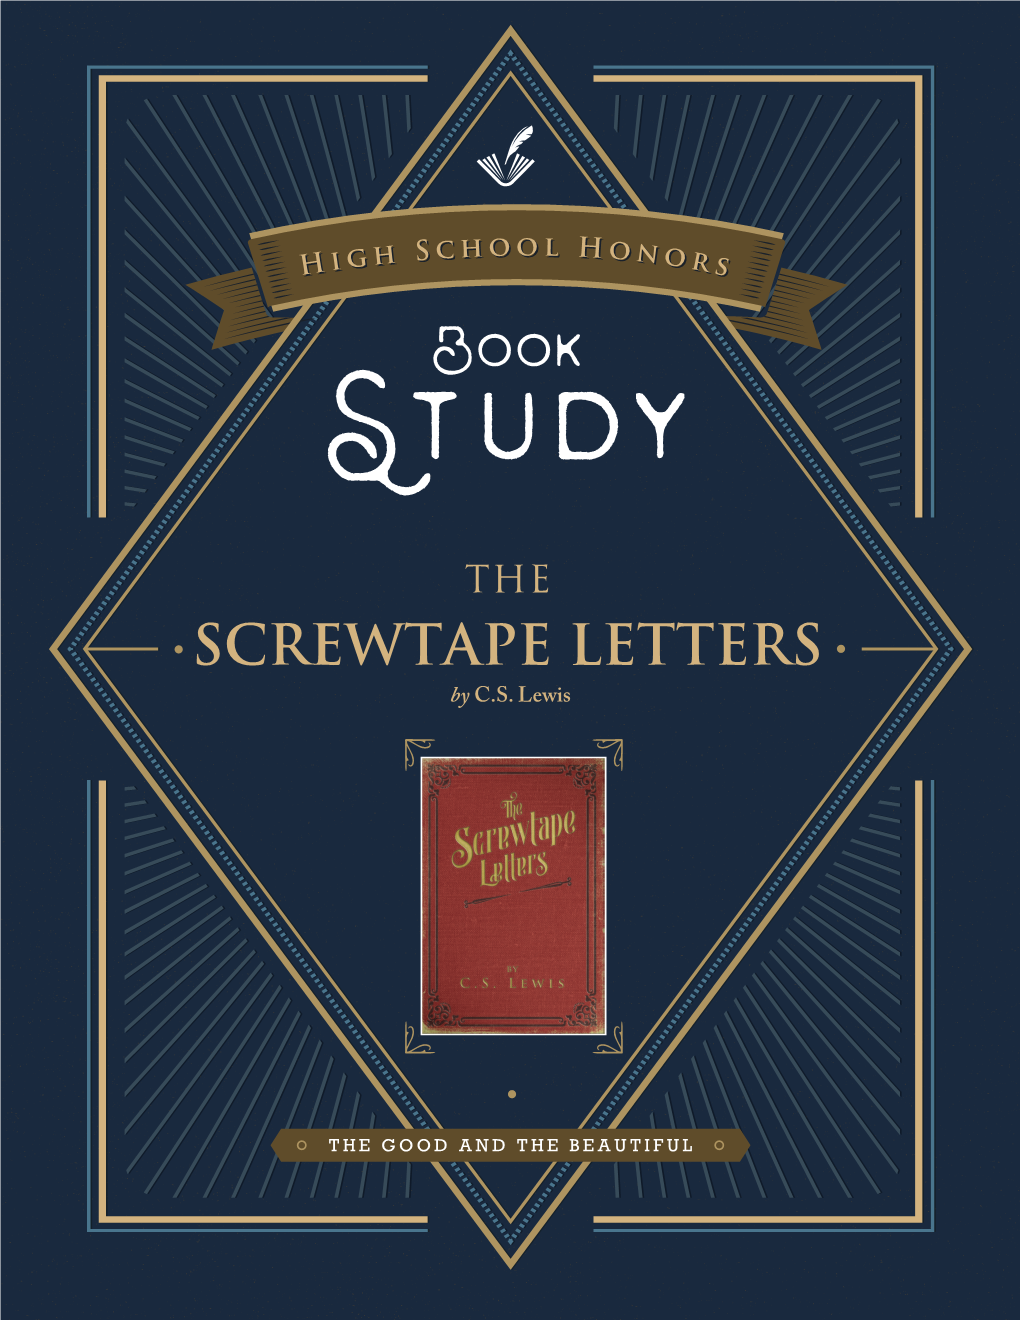 Screwtape Letters Honors Study Cover-1.0-PRINT.Pdf 1 1/29/2020 5:19:34 PM